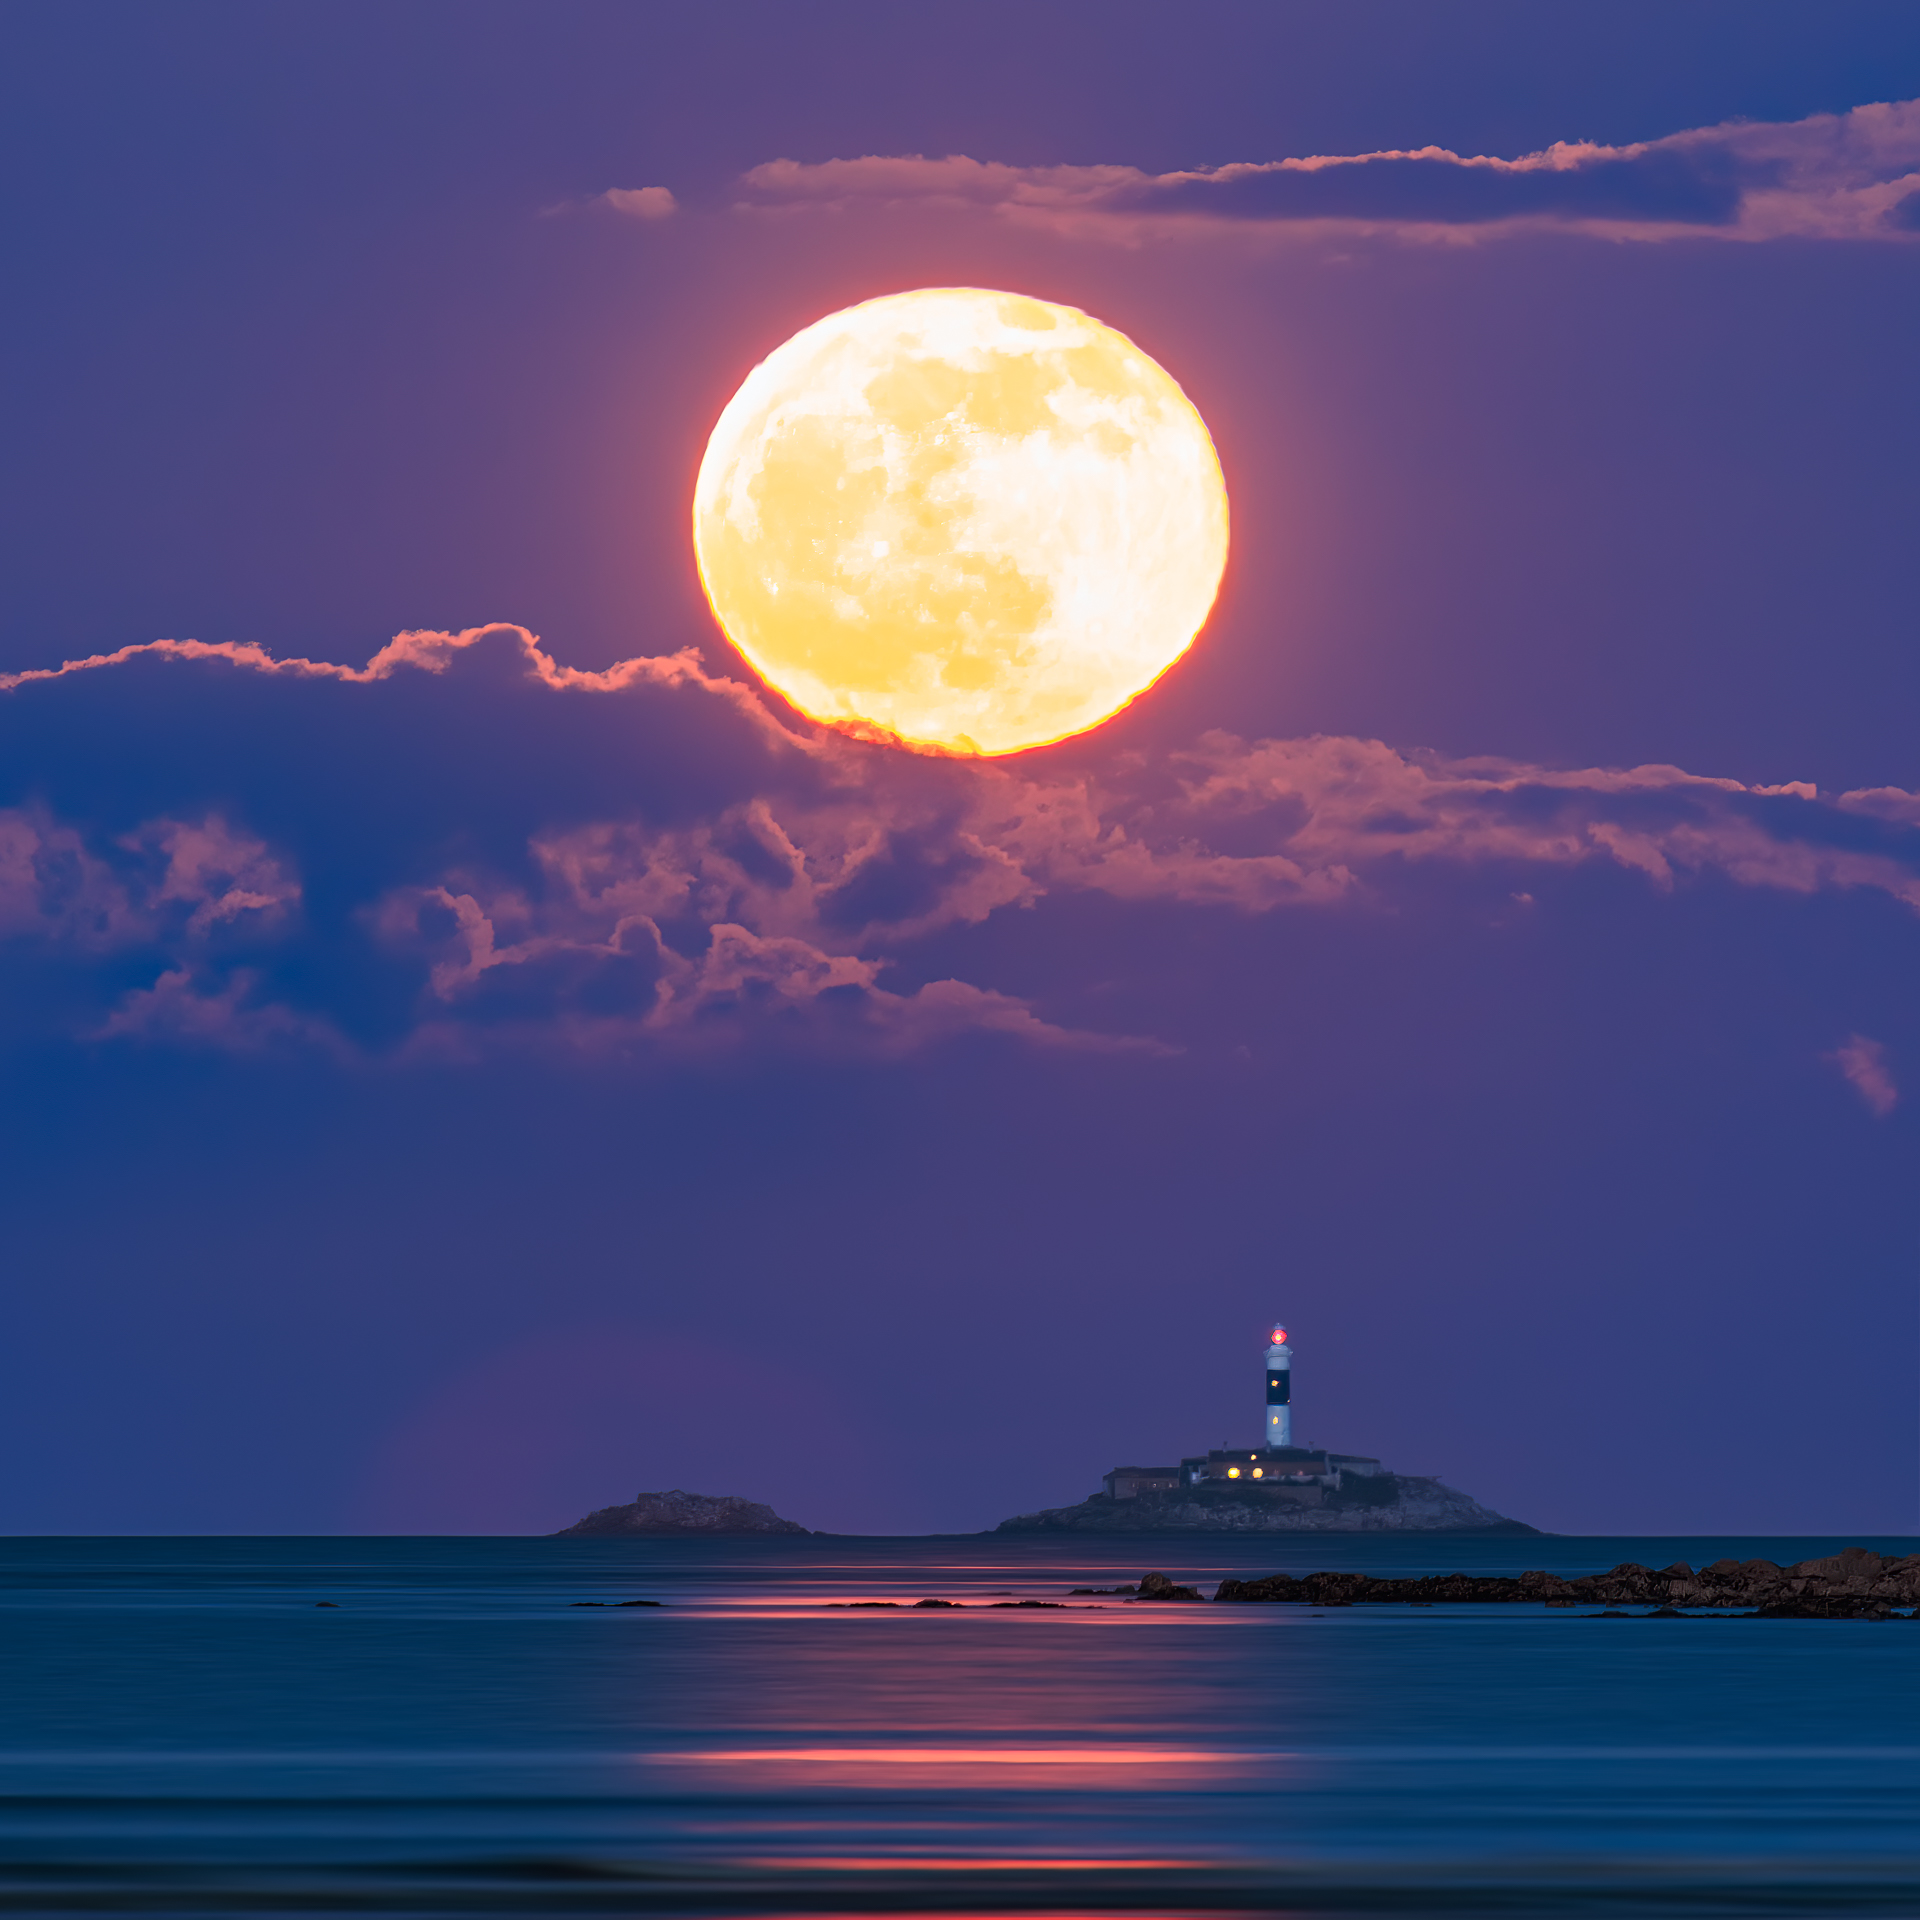 Full Moon rising above Rockabill Island and Lighthouse, moonlight glimmering in the Irish Sea.